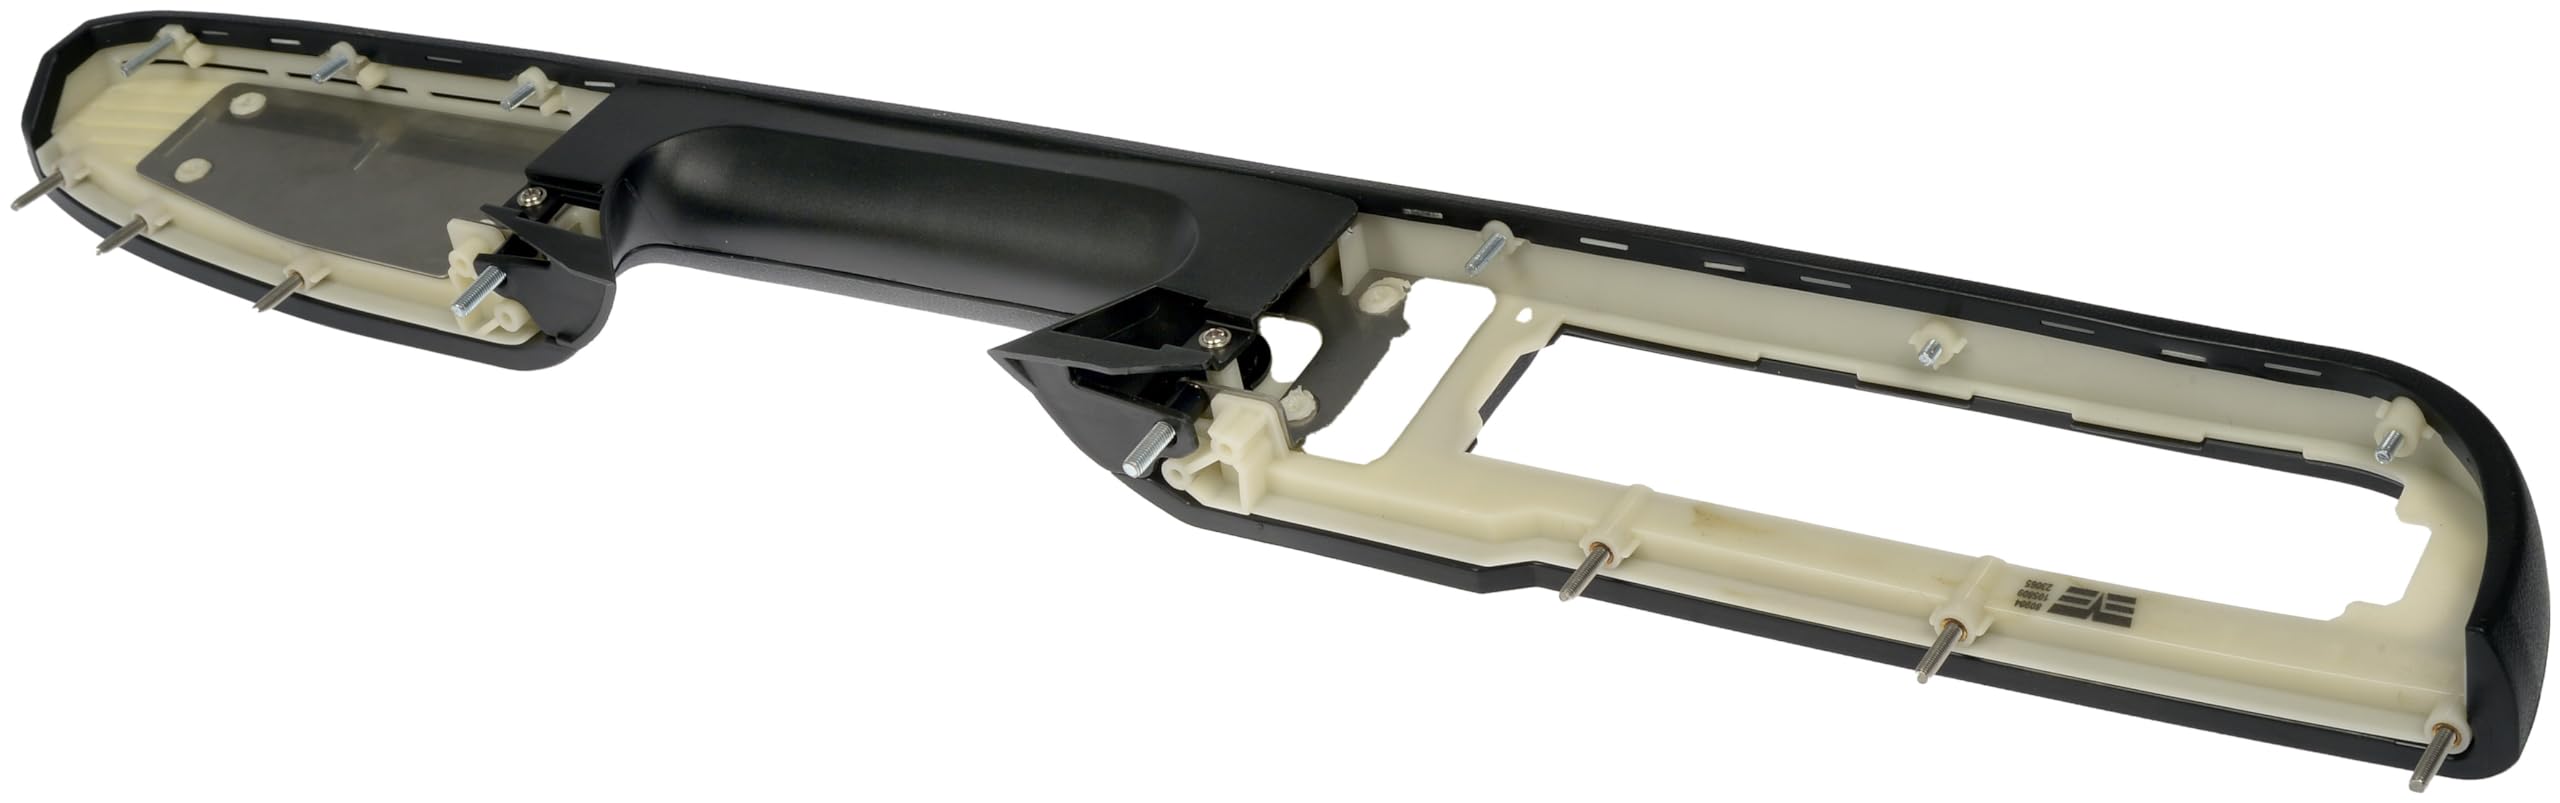 Dorman 80994 Front Driver Side Door Armrest Repair Compatible with Select Chevrolet/GMC Models, Black (OE FIX)